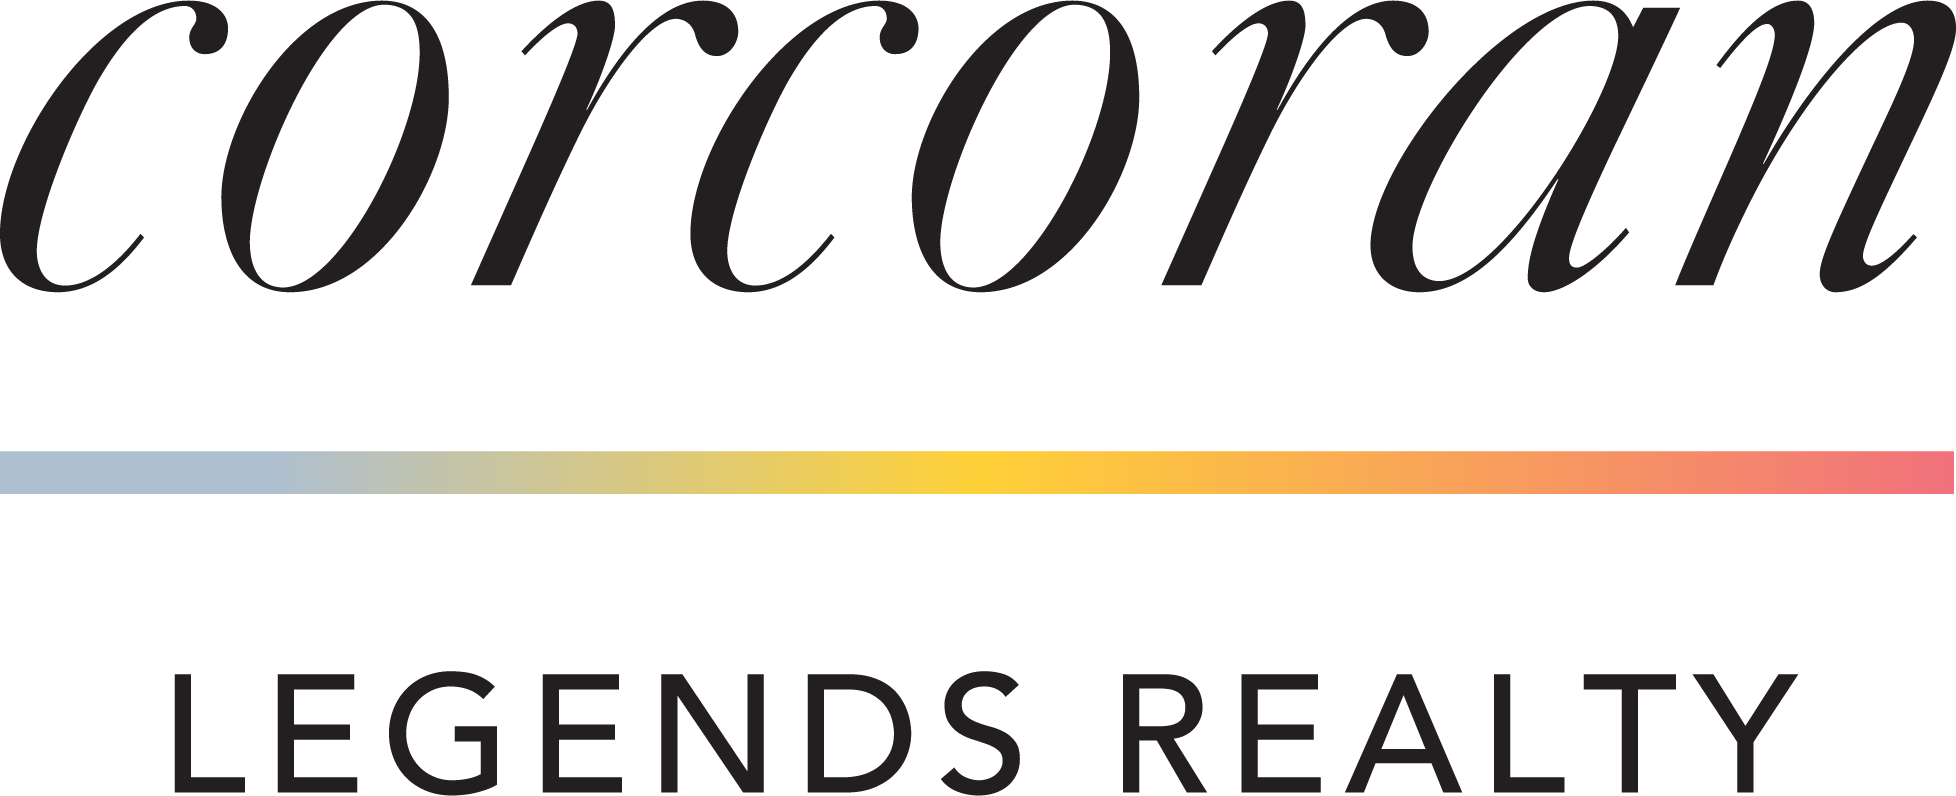 Corcoran Legends Realty logo